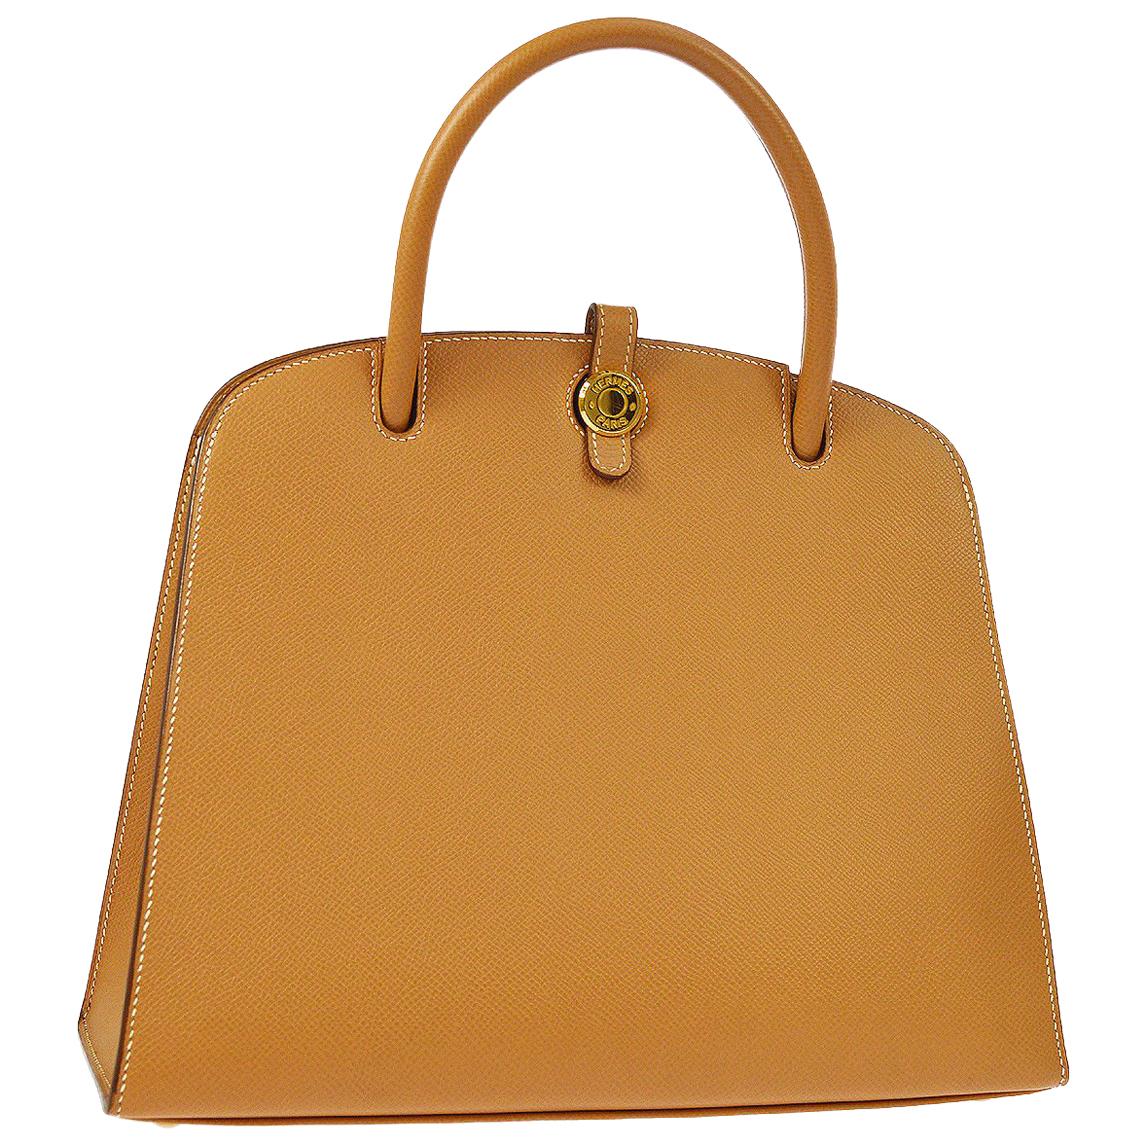 Hermes Cognac Tan Leather Gold Top Handle Satchel Tote Bag